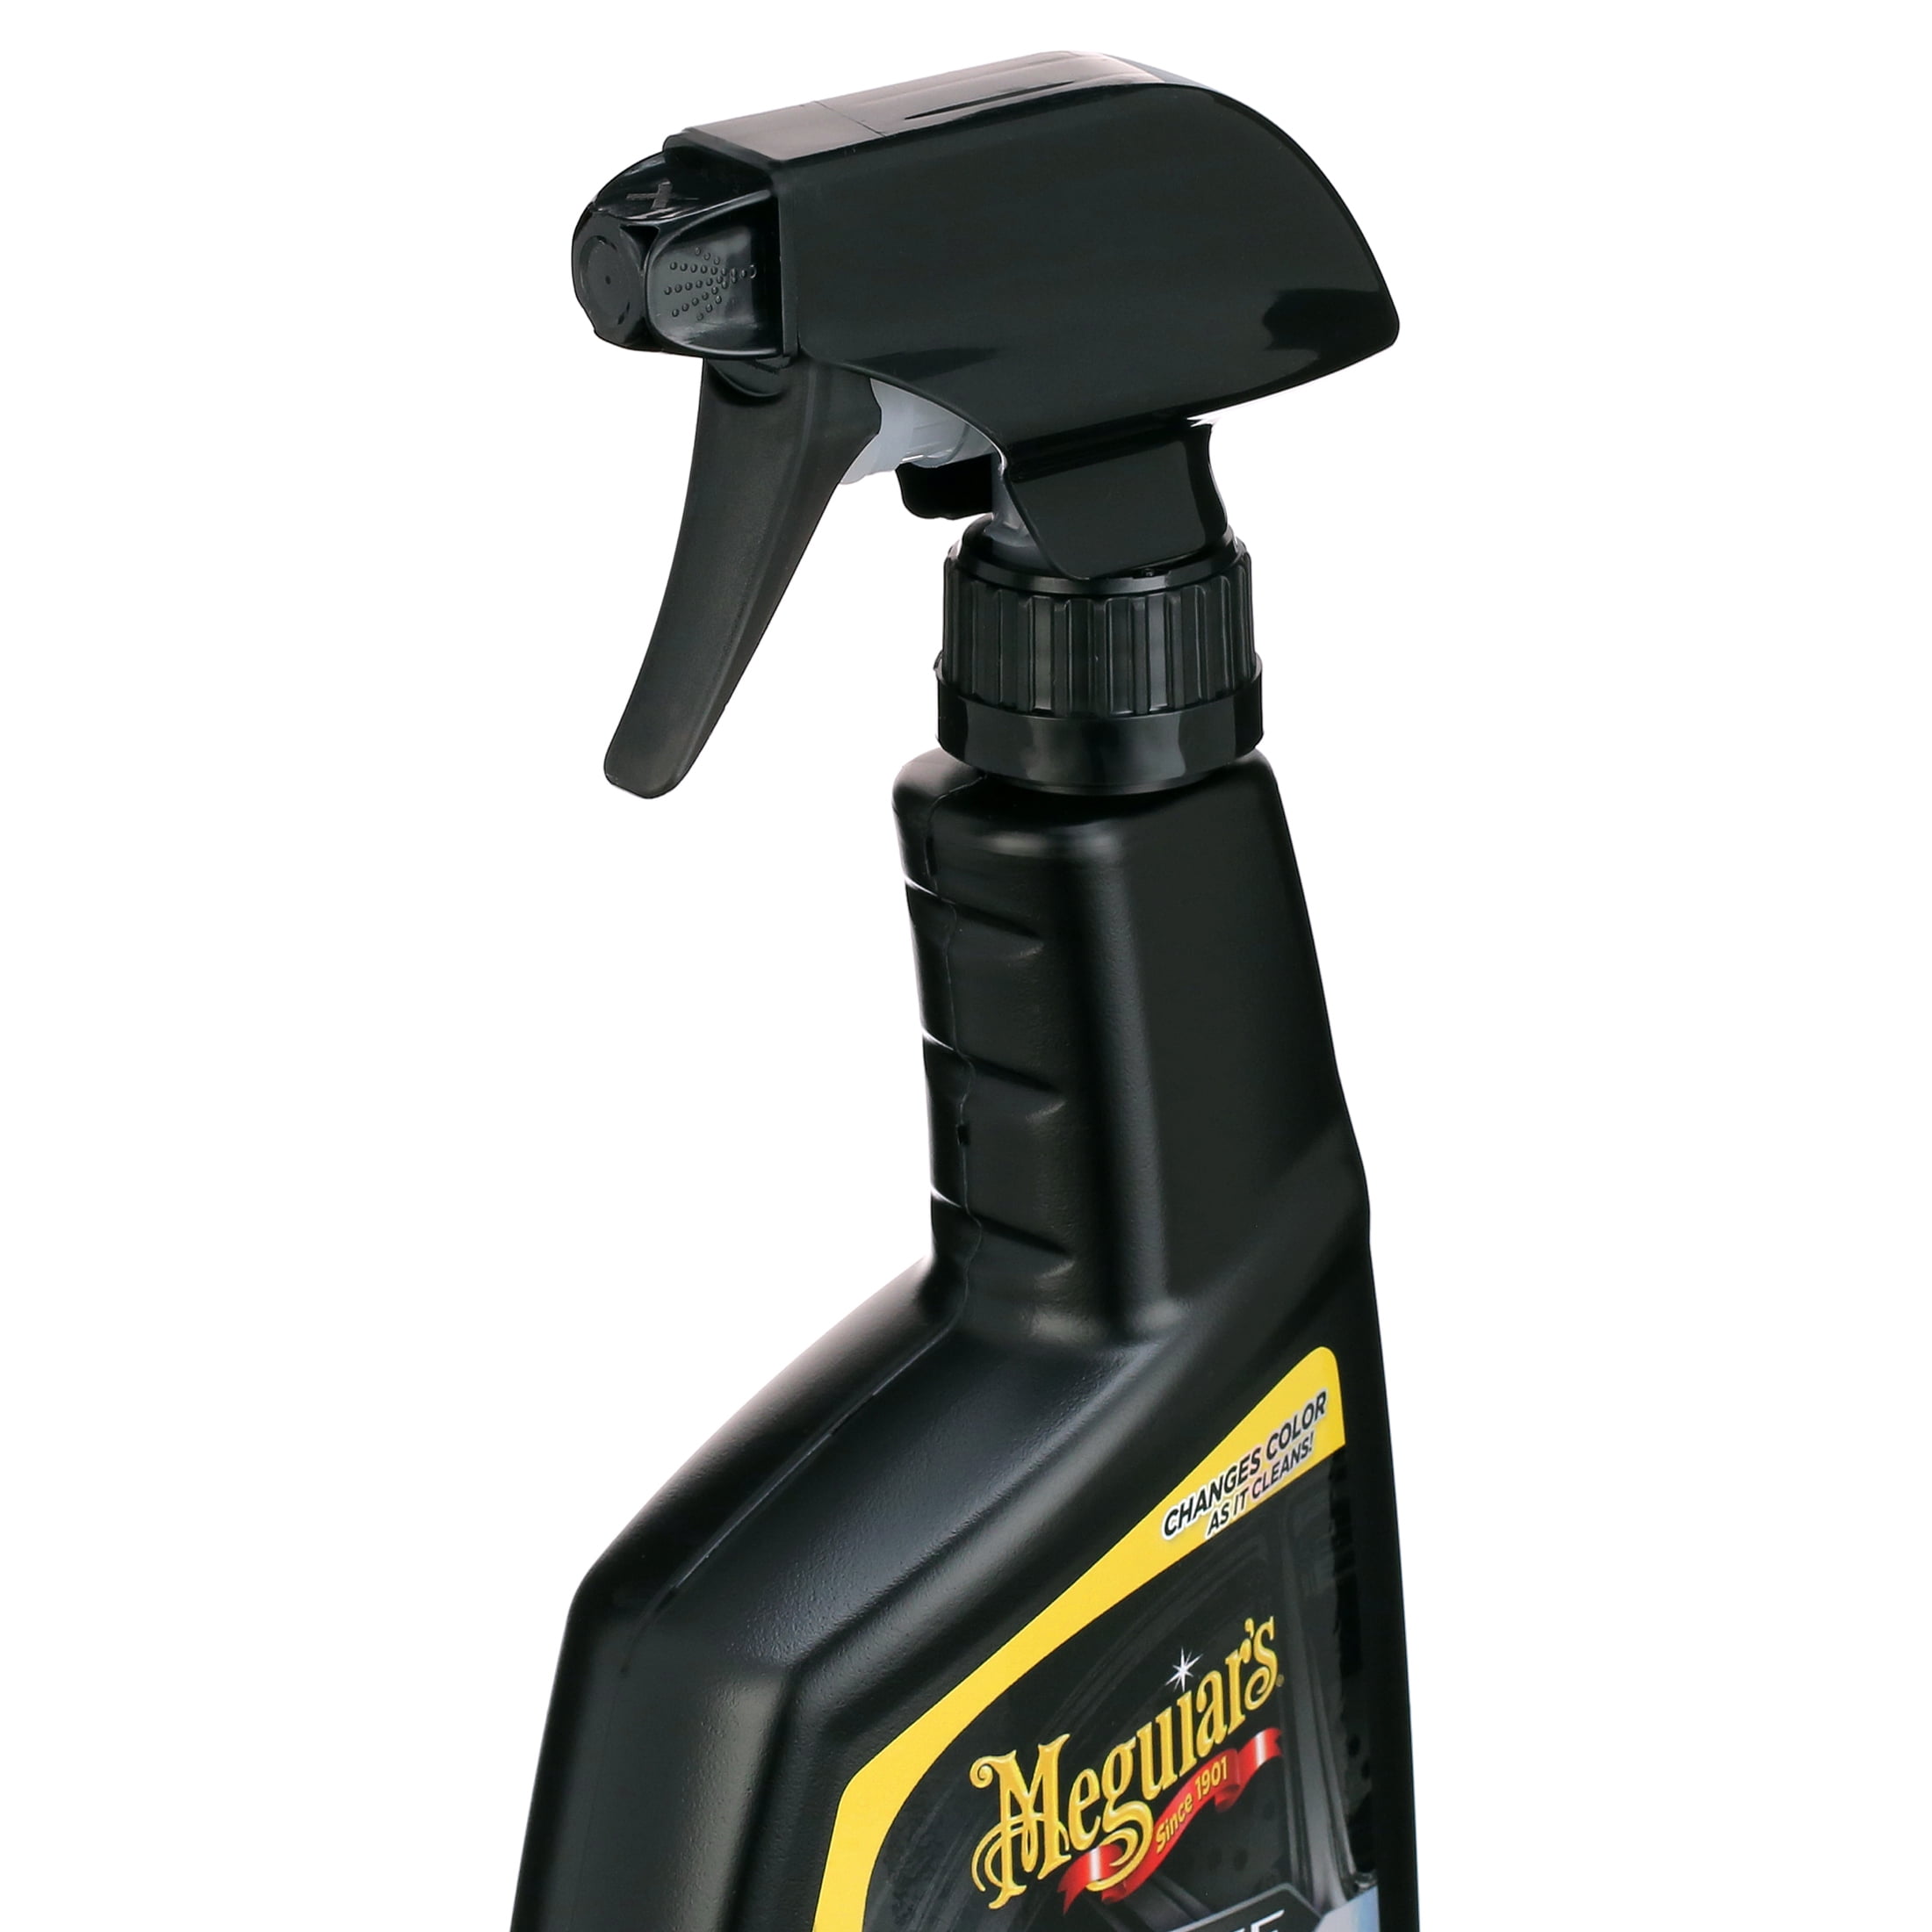 Meguiar's® Ultimate All Wheel Cleaner, G180124, 24 oz., Spray